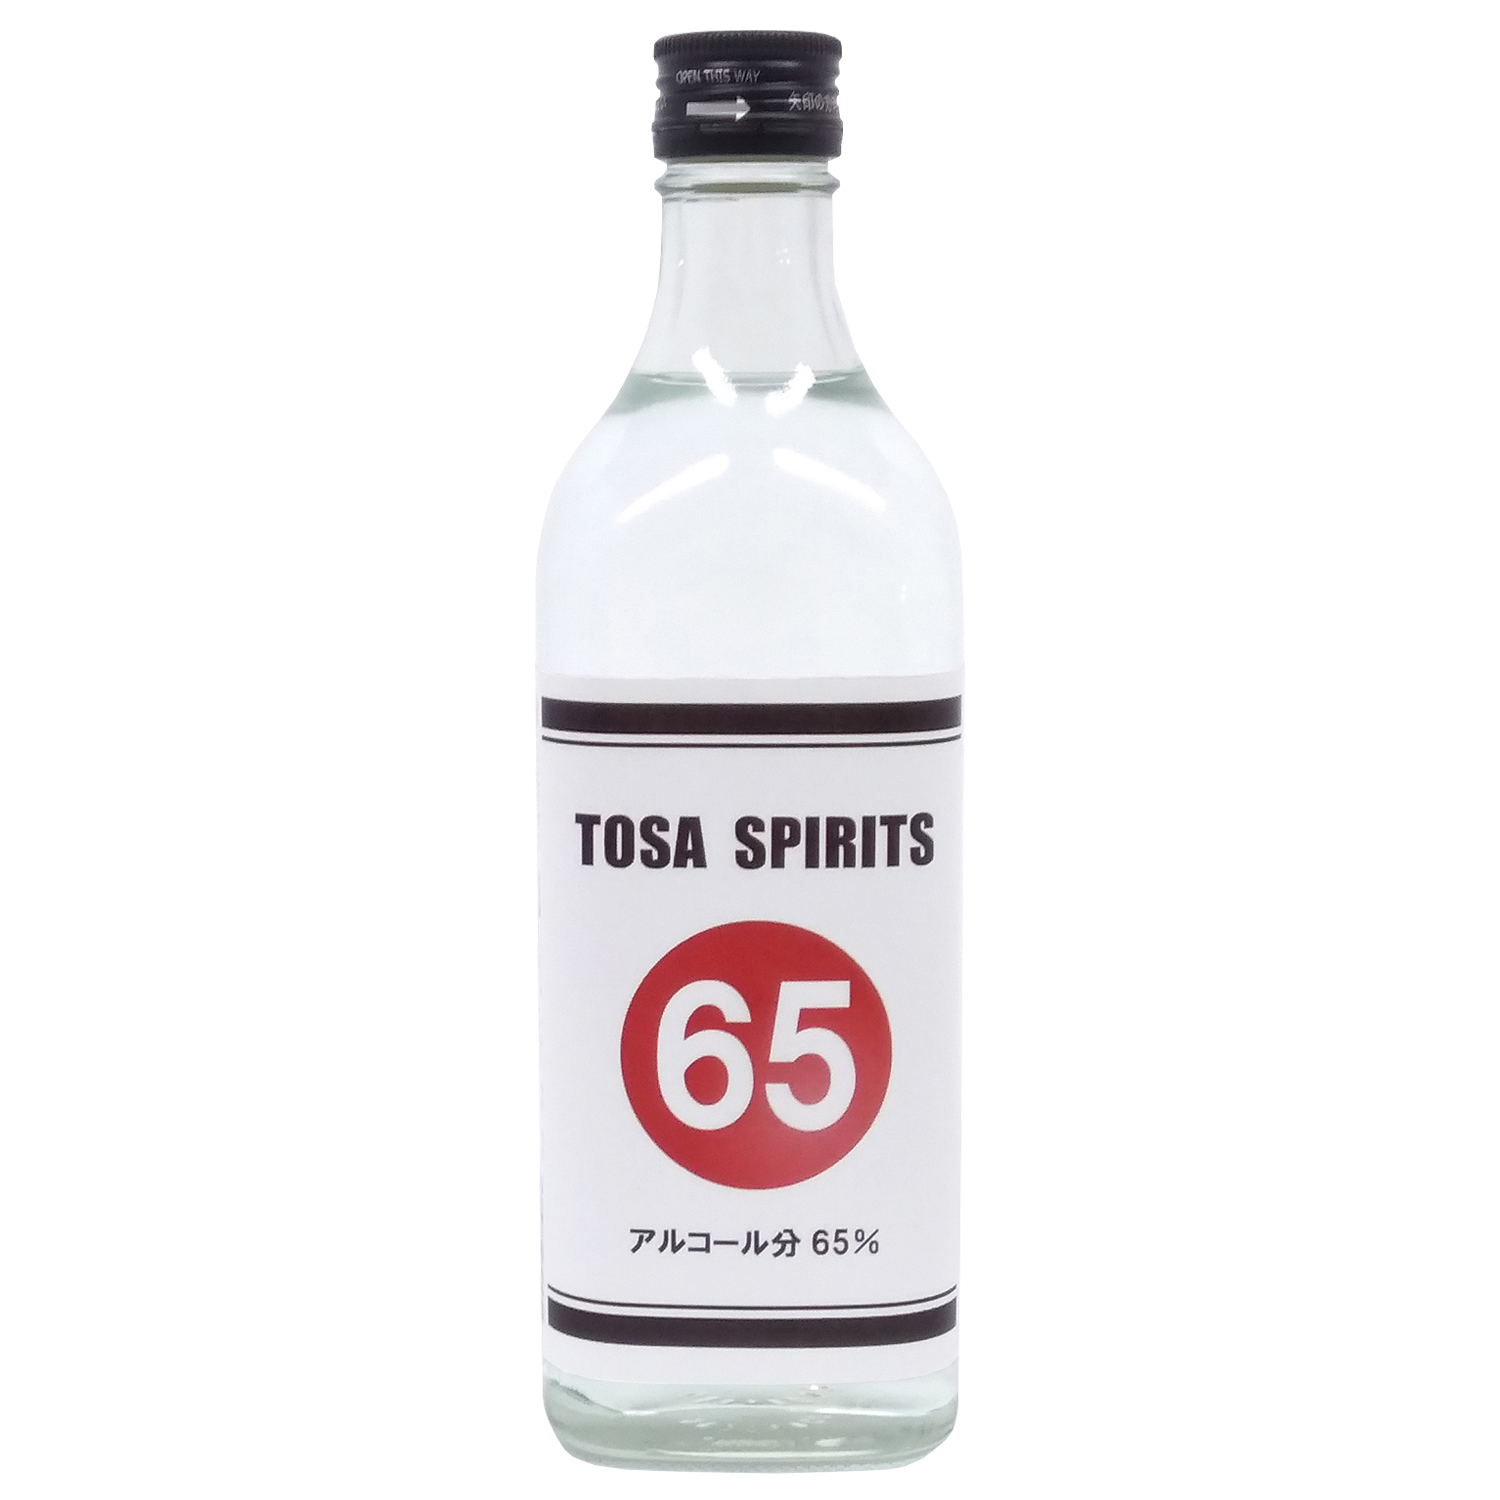 TOSA SPIRITS 65